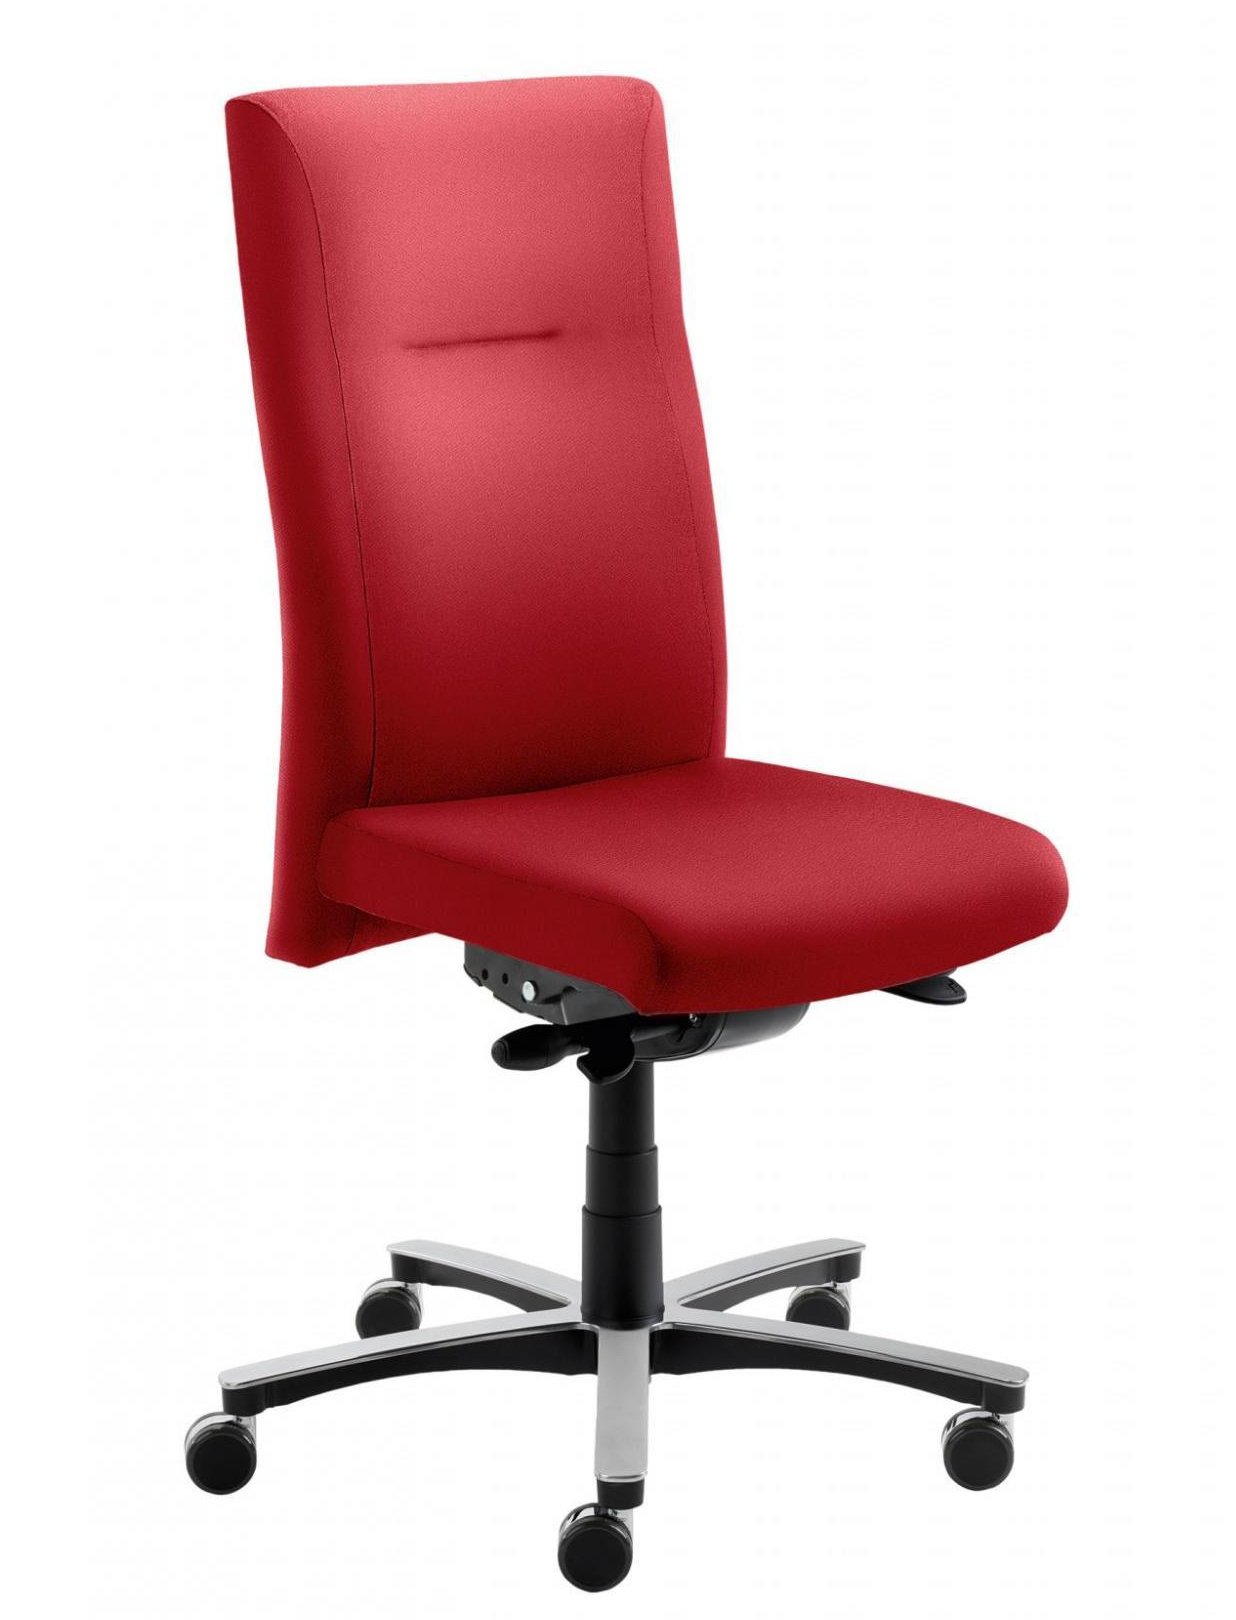 bis 150 kg belastbarer Schreibtischstuhl roter Sitzbezug